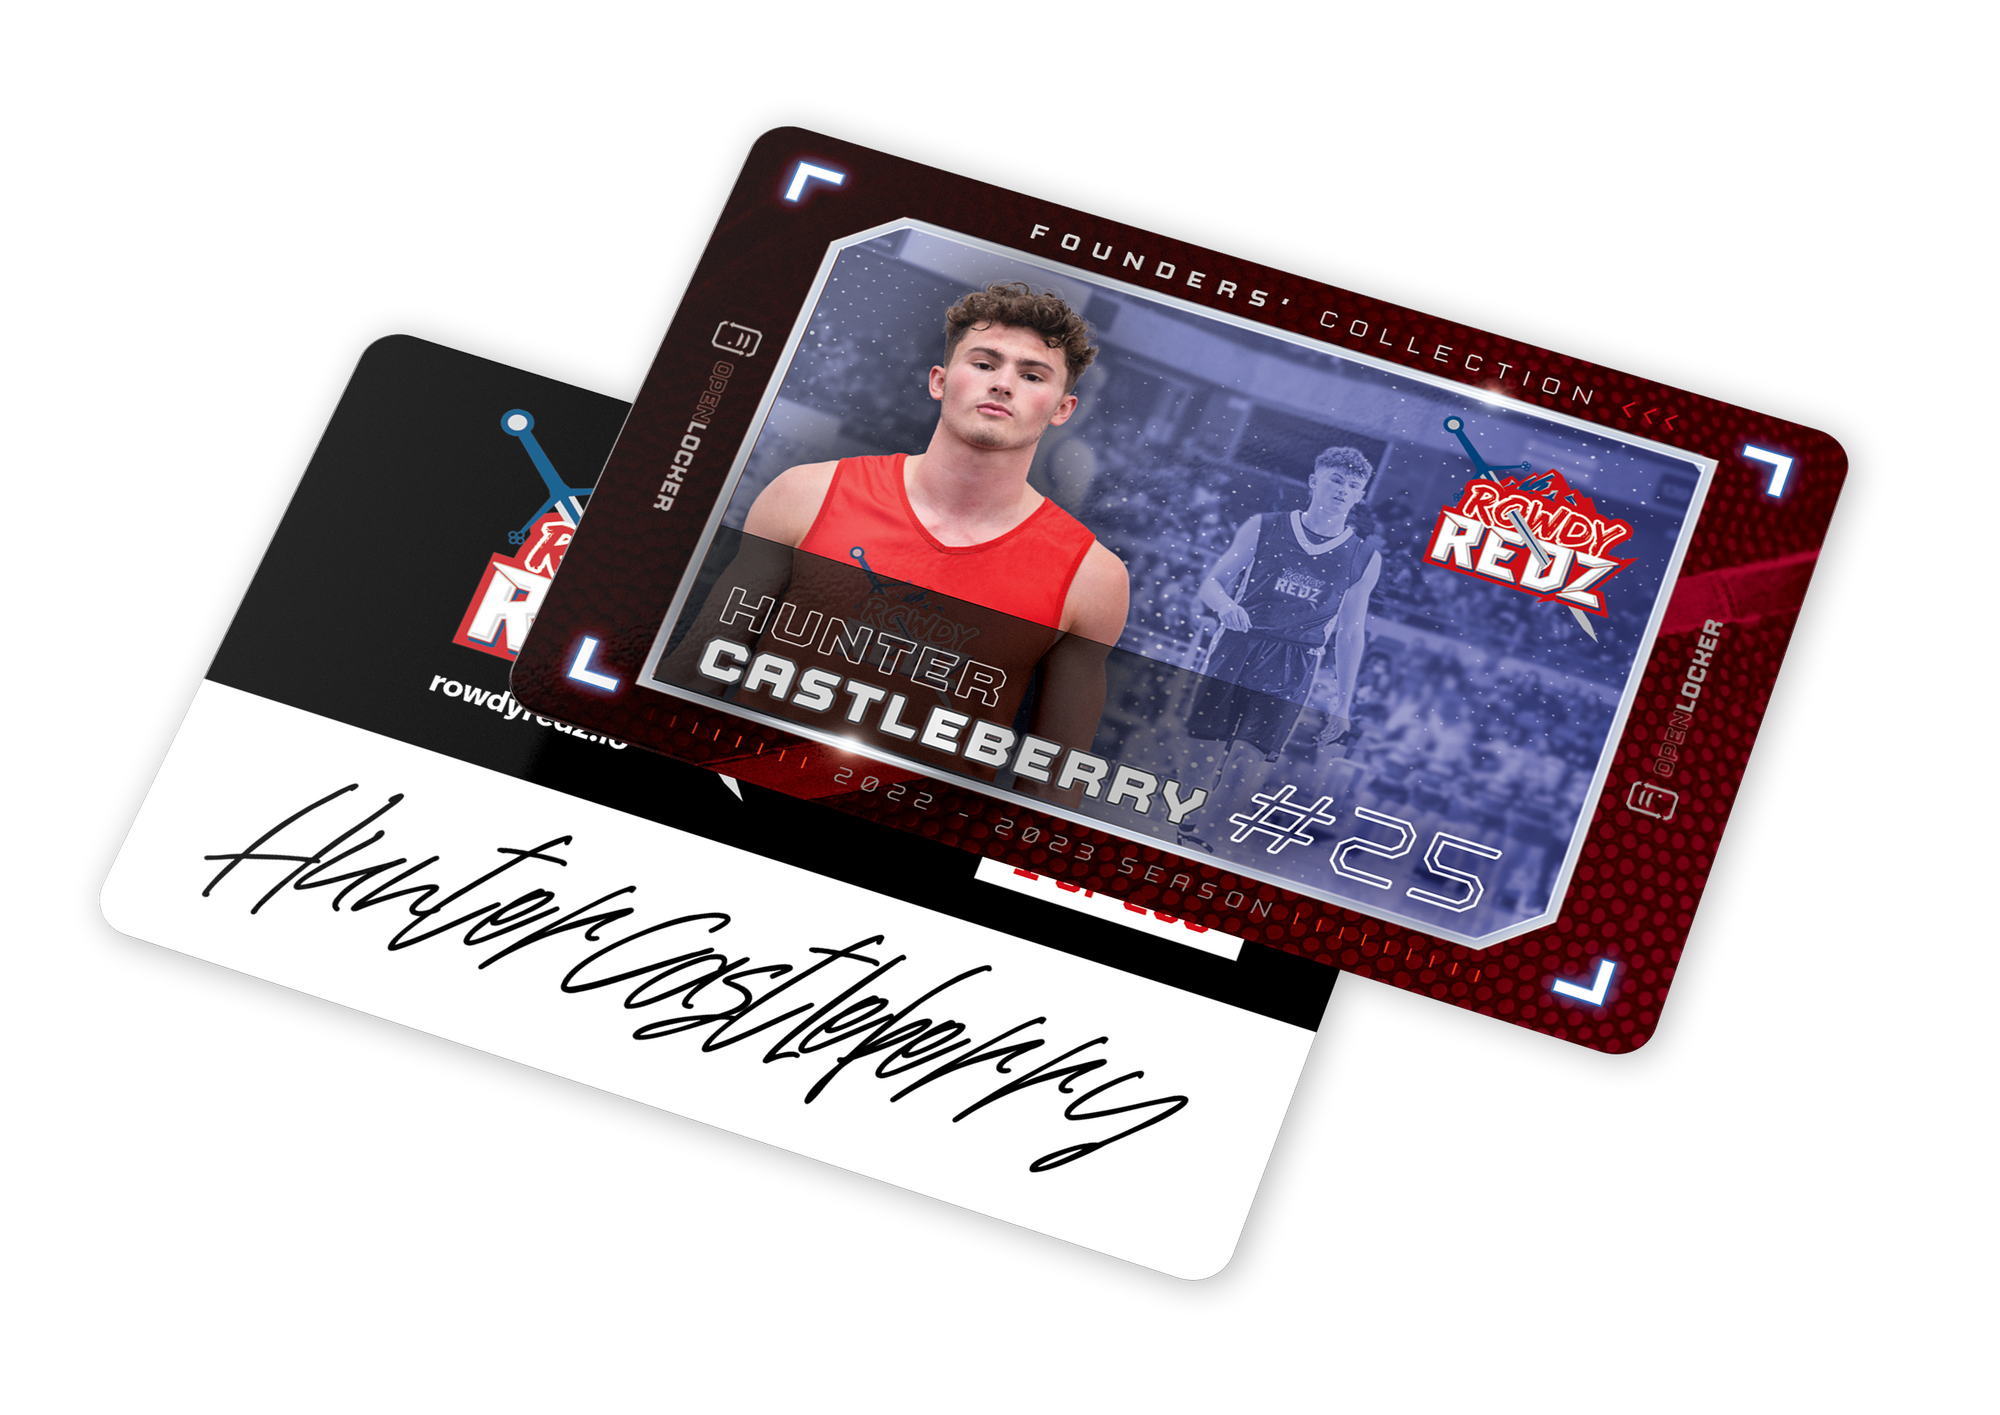 Rowdy Redz Basketball Collection Autographed Physical Card: Hunter Castleberry